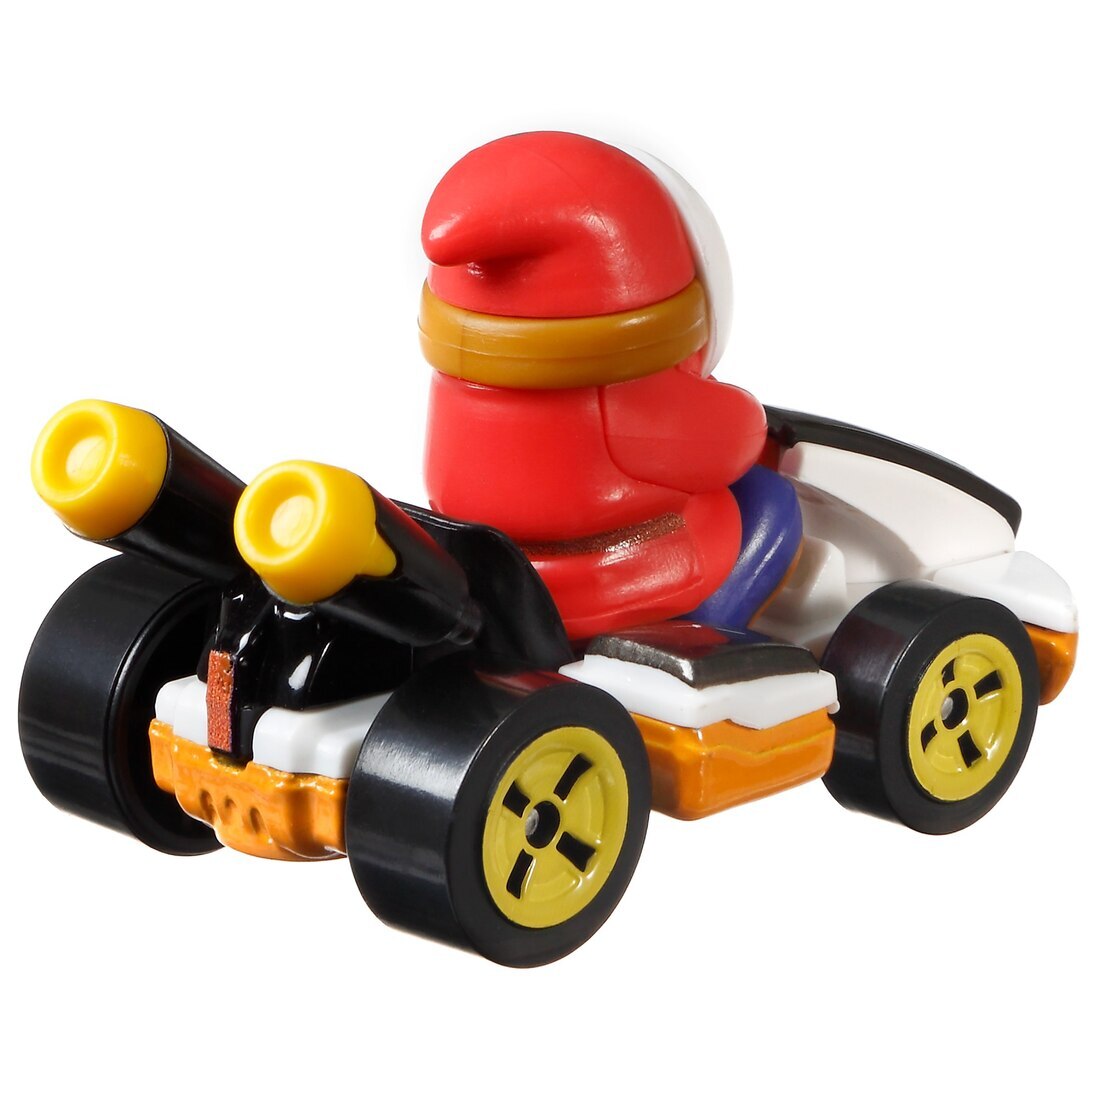 Hot Wheels Mario Kart - Shy Guy (Standard Kart)